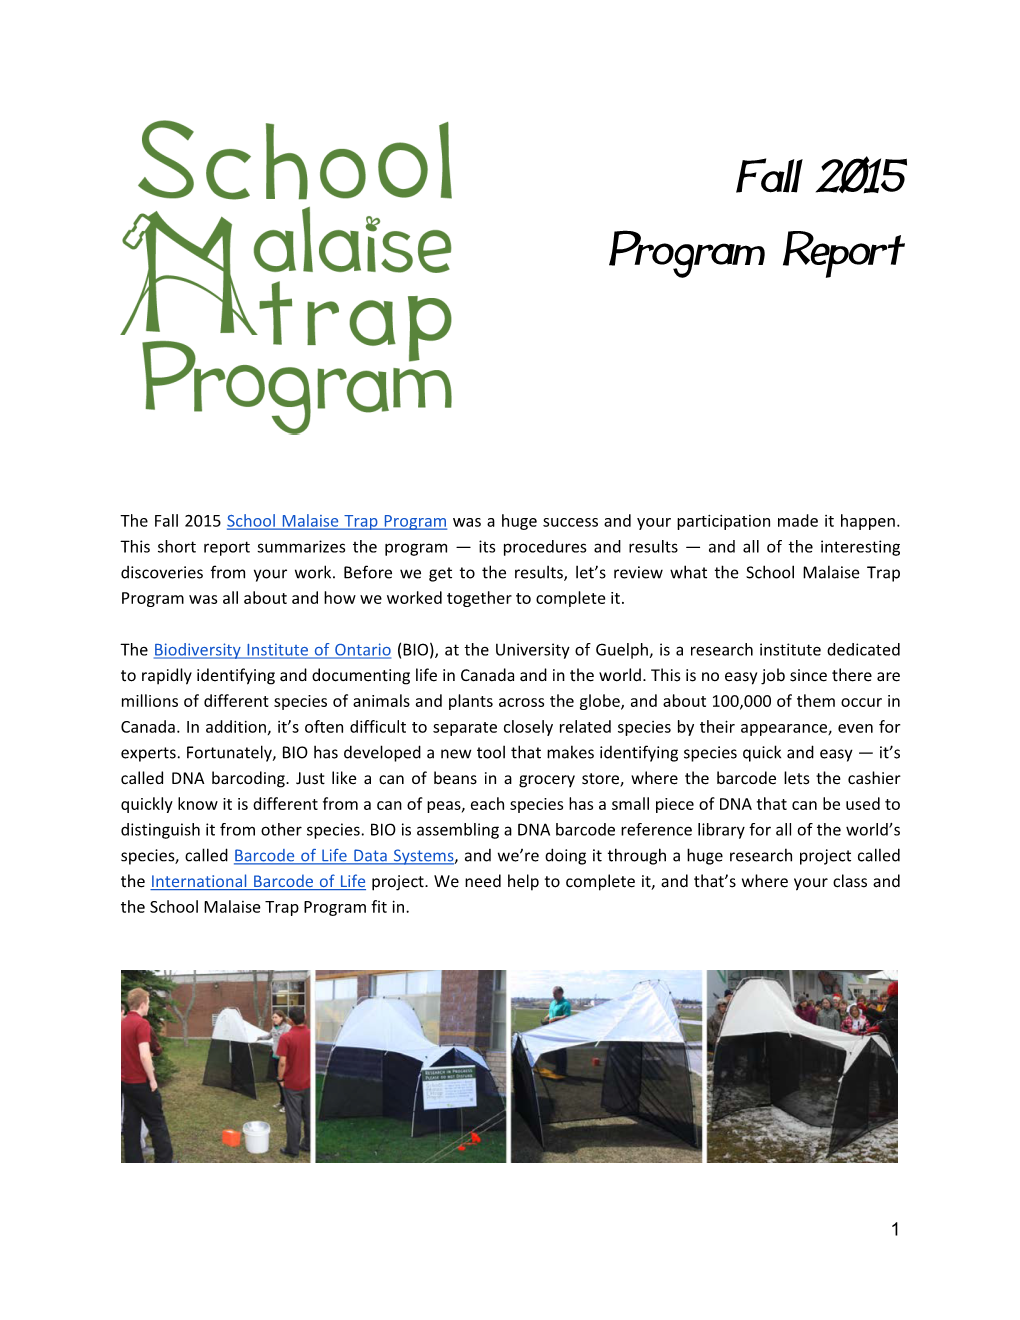 Fall 2015 Program Report